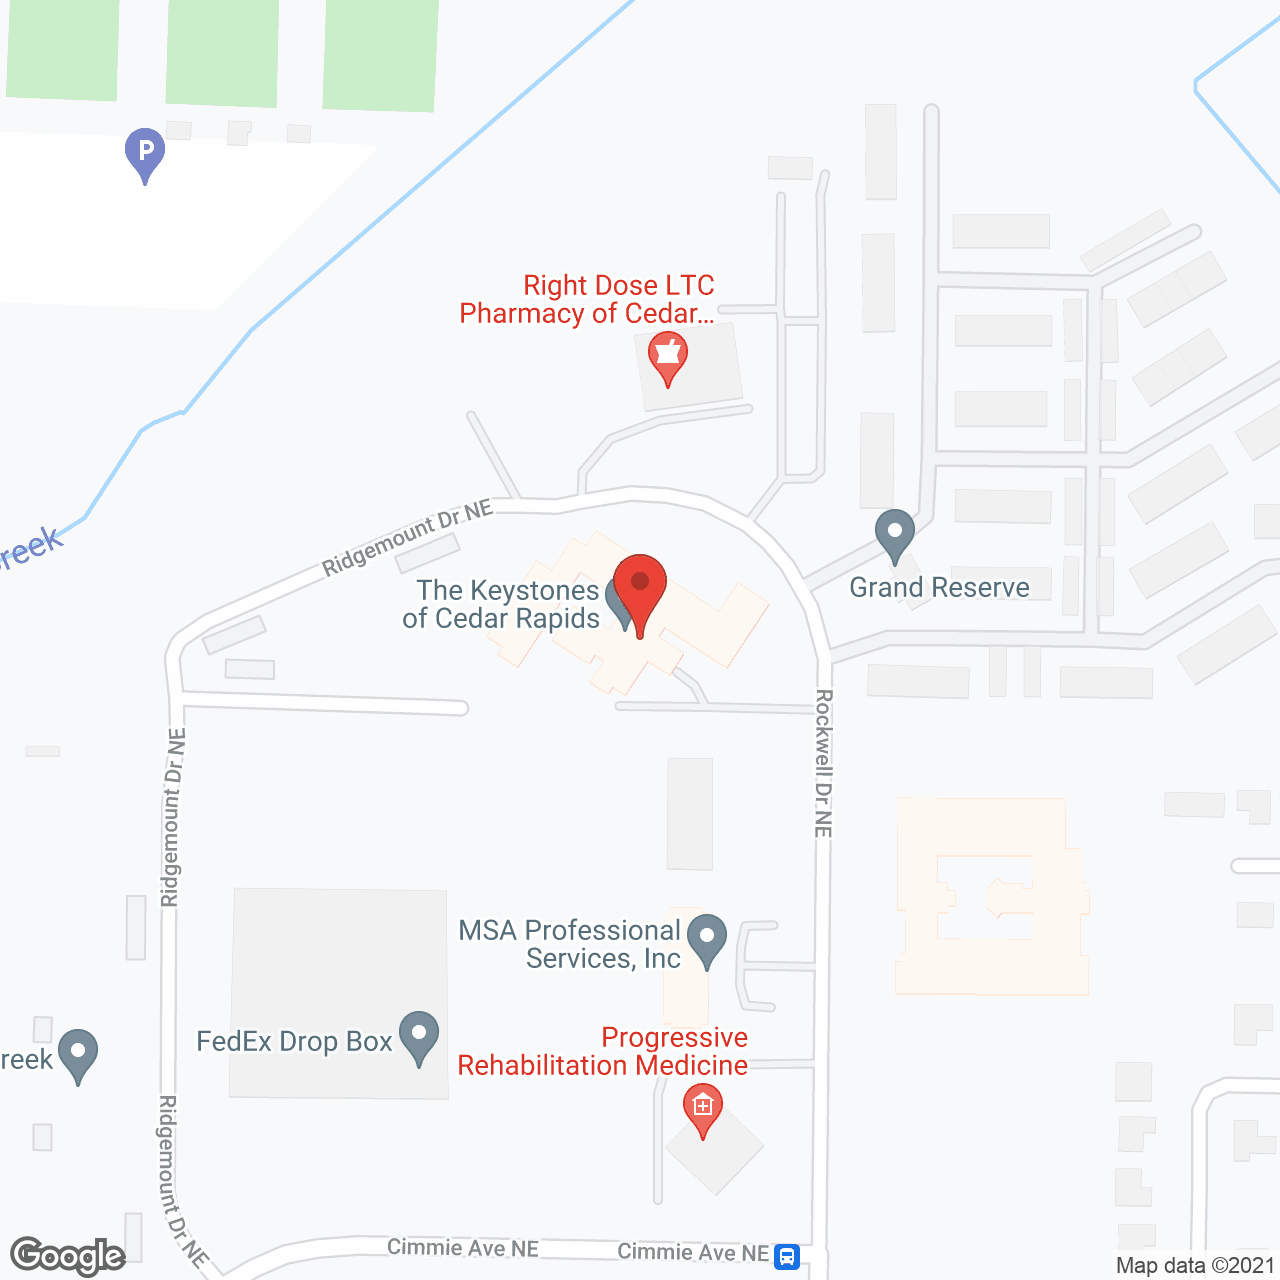 The Keystones of Cedar Rapids in google map